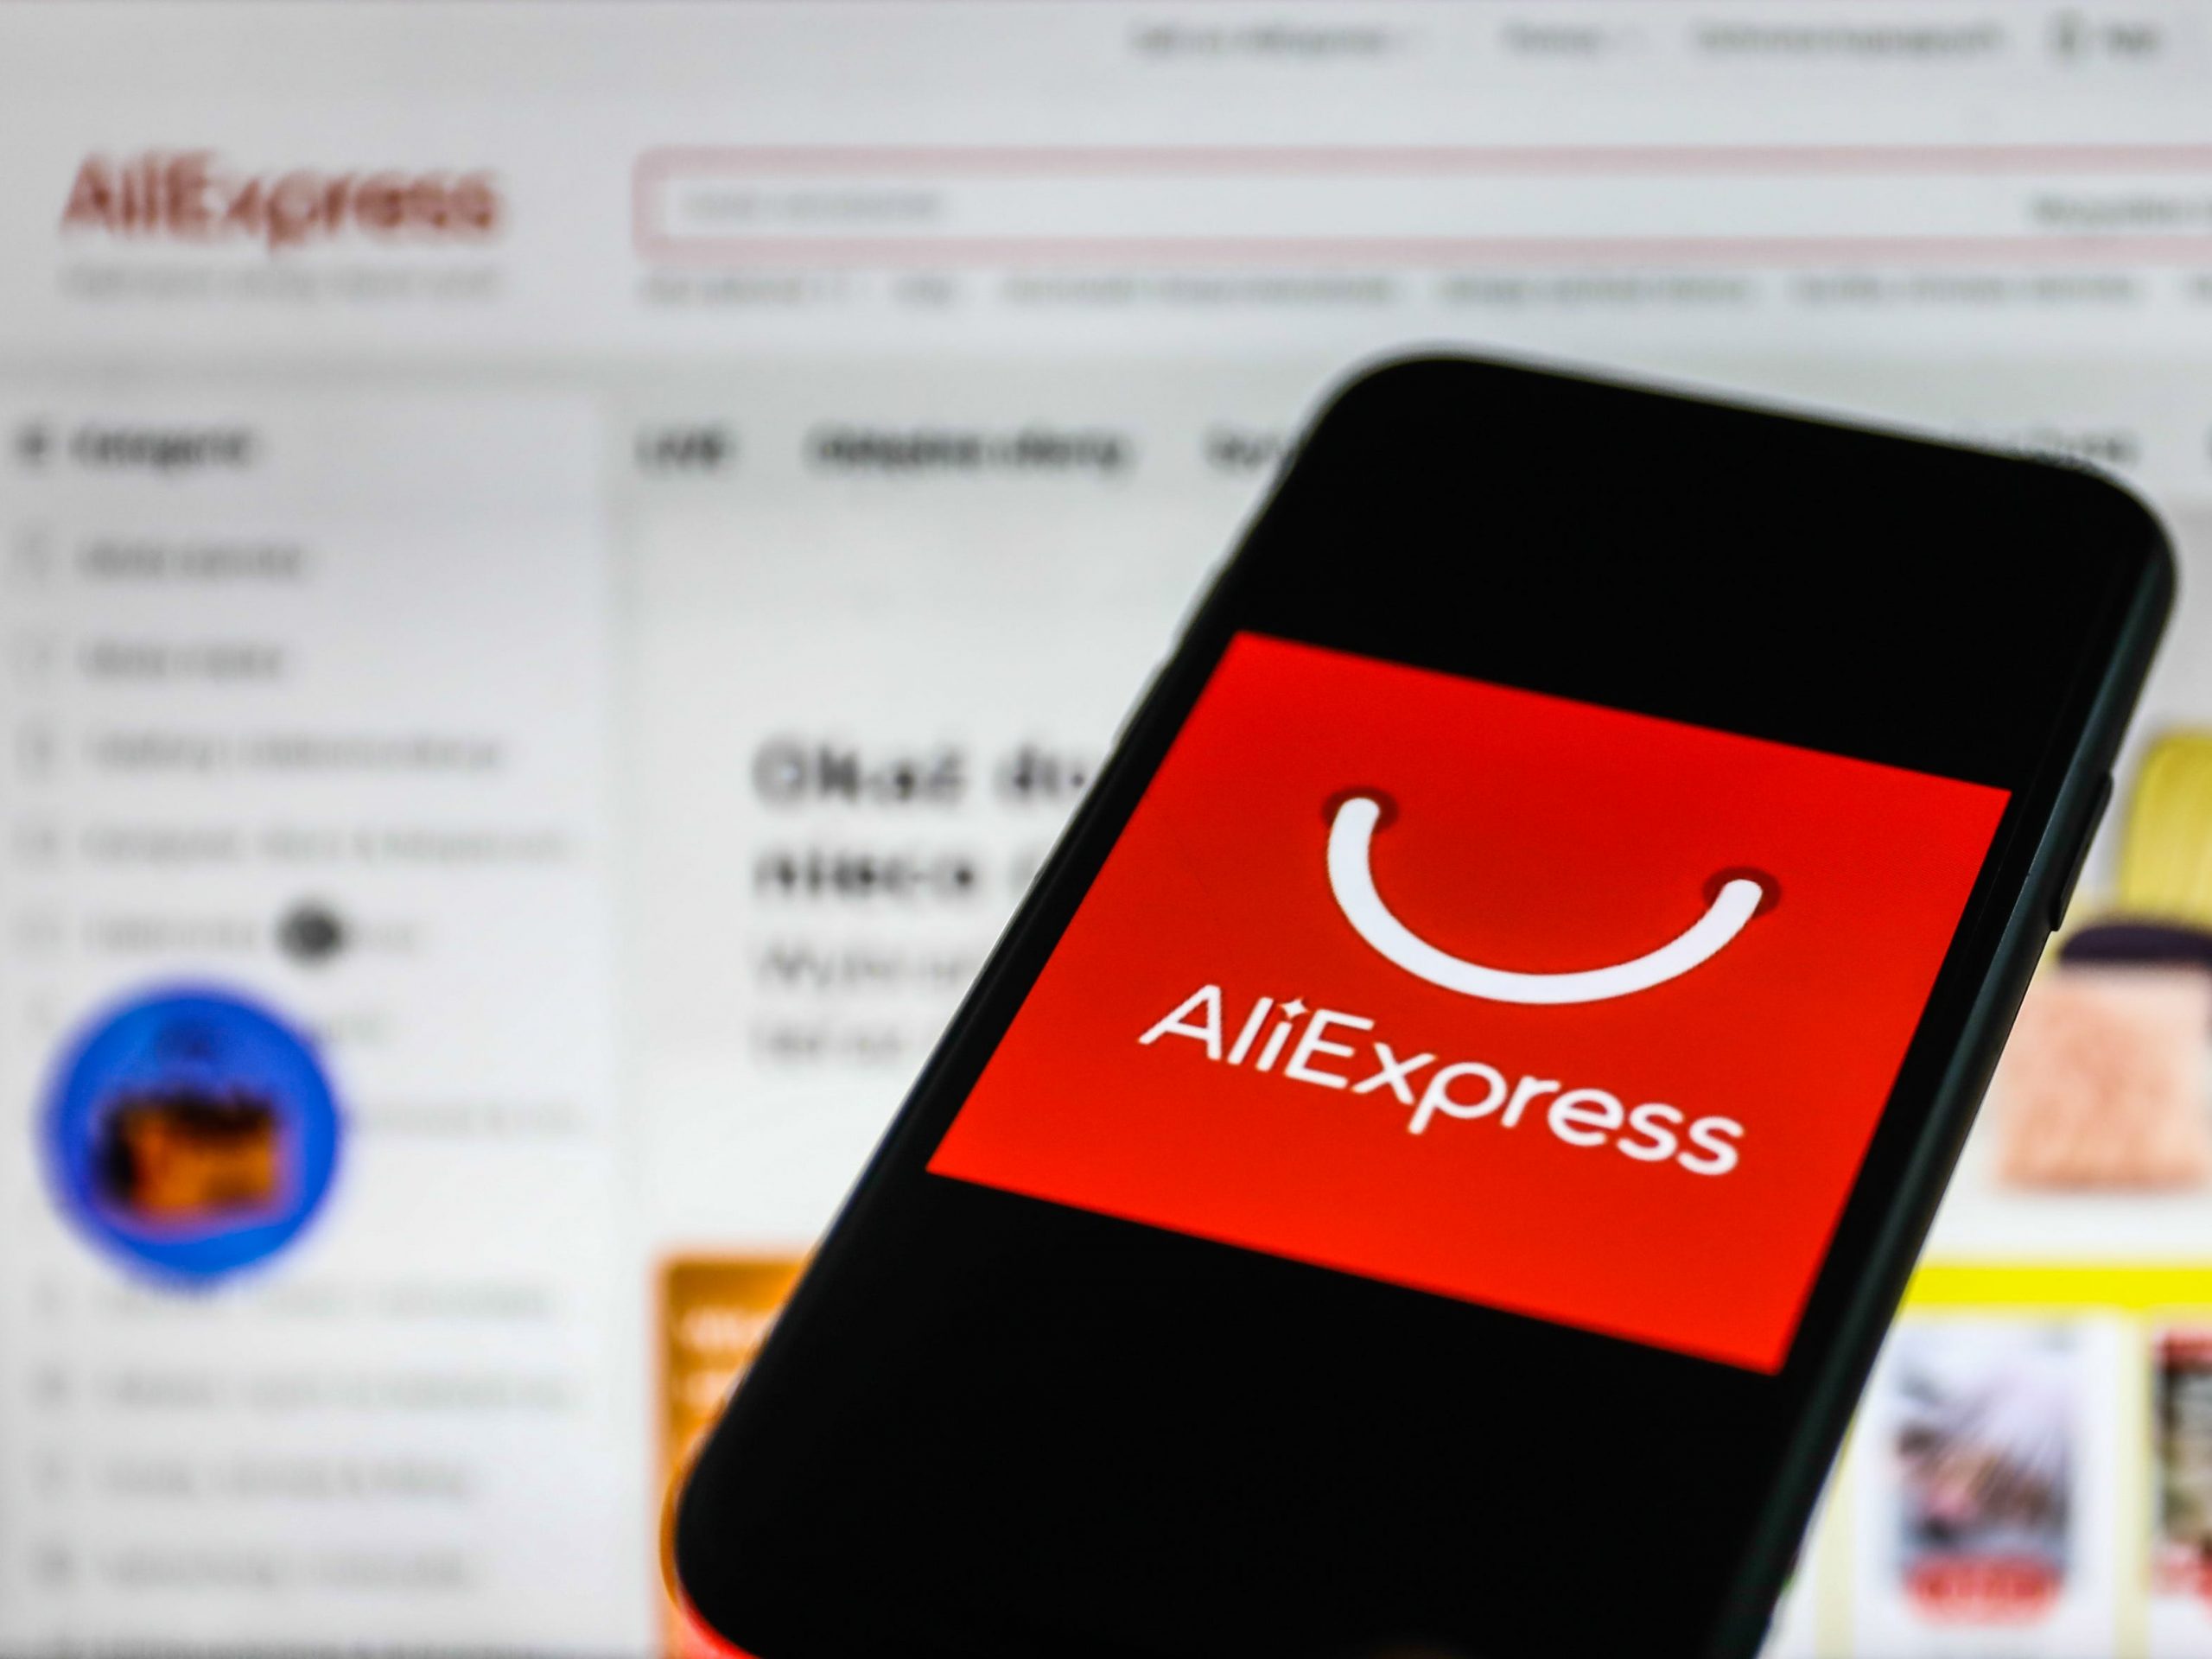 AliExpress logo displayed on a phone screen and AliExpress website displayed on a laptop screen. Photo taken in January 2022.